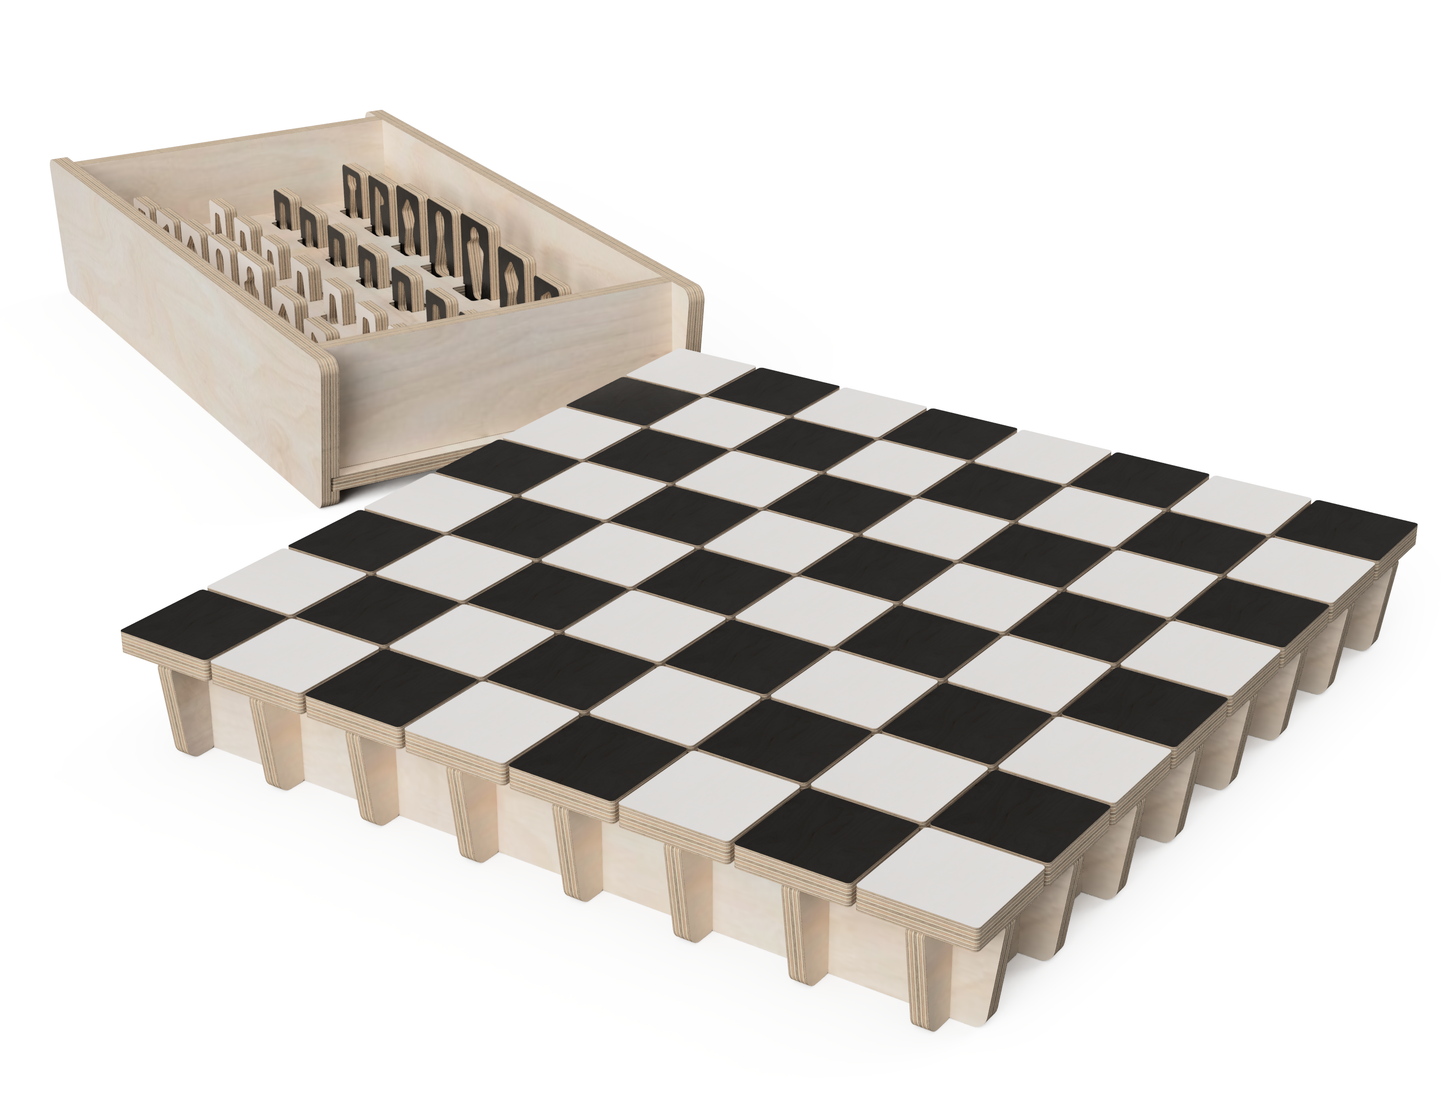 Premium Chess Set DXF Files